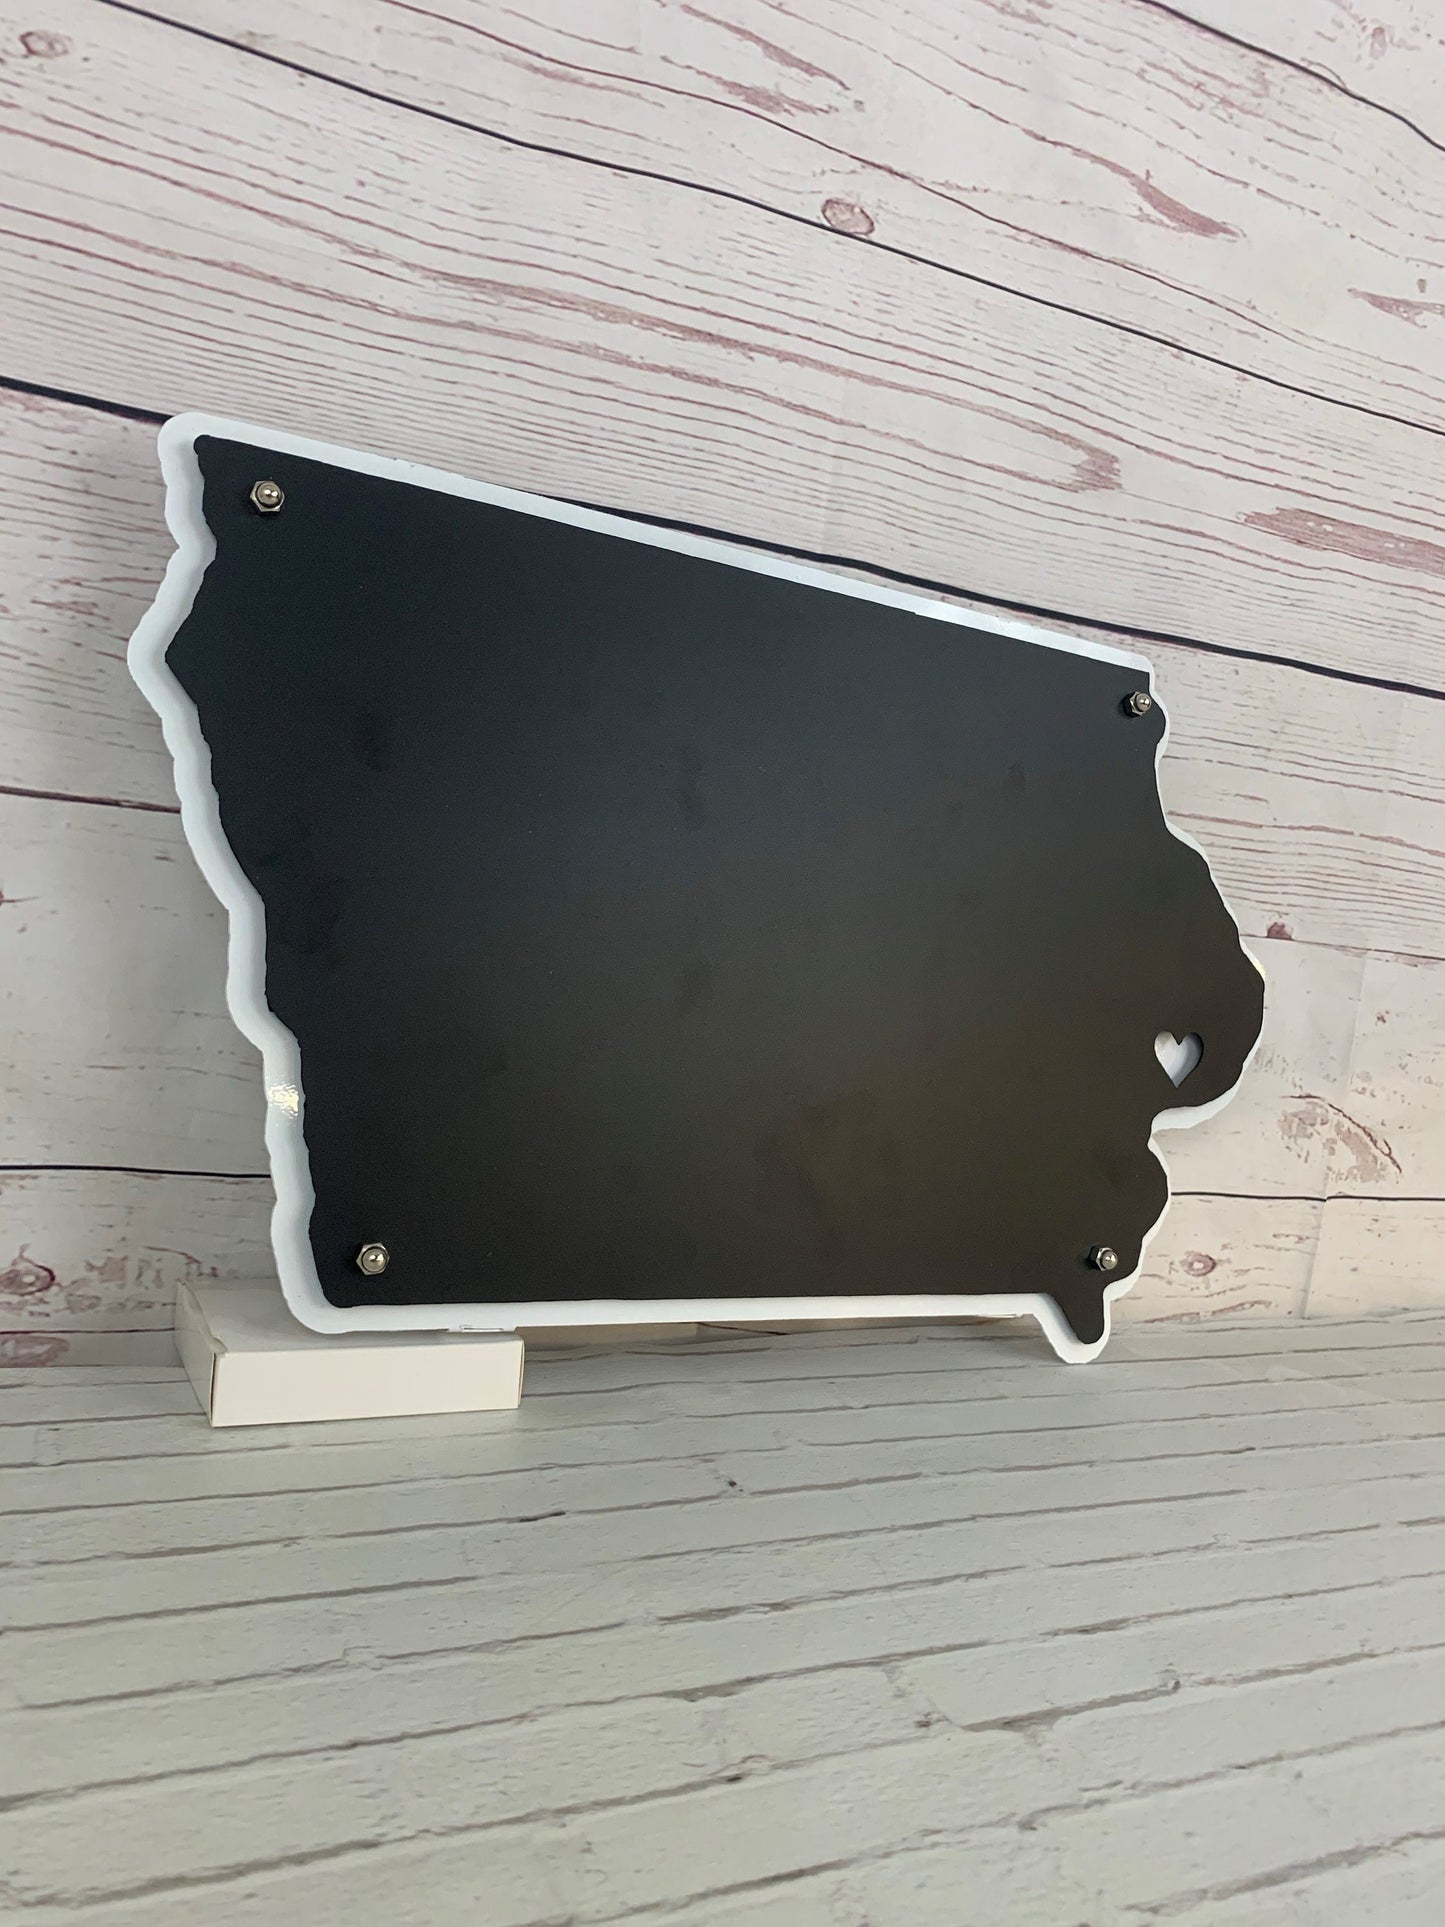 2 Layered Iowa Heart Metal Art Sign